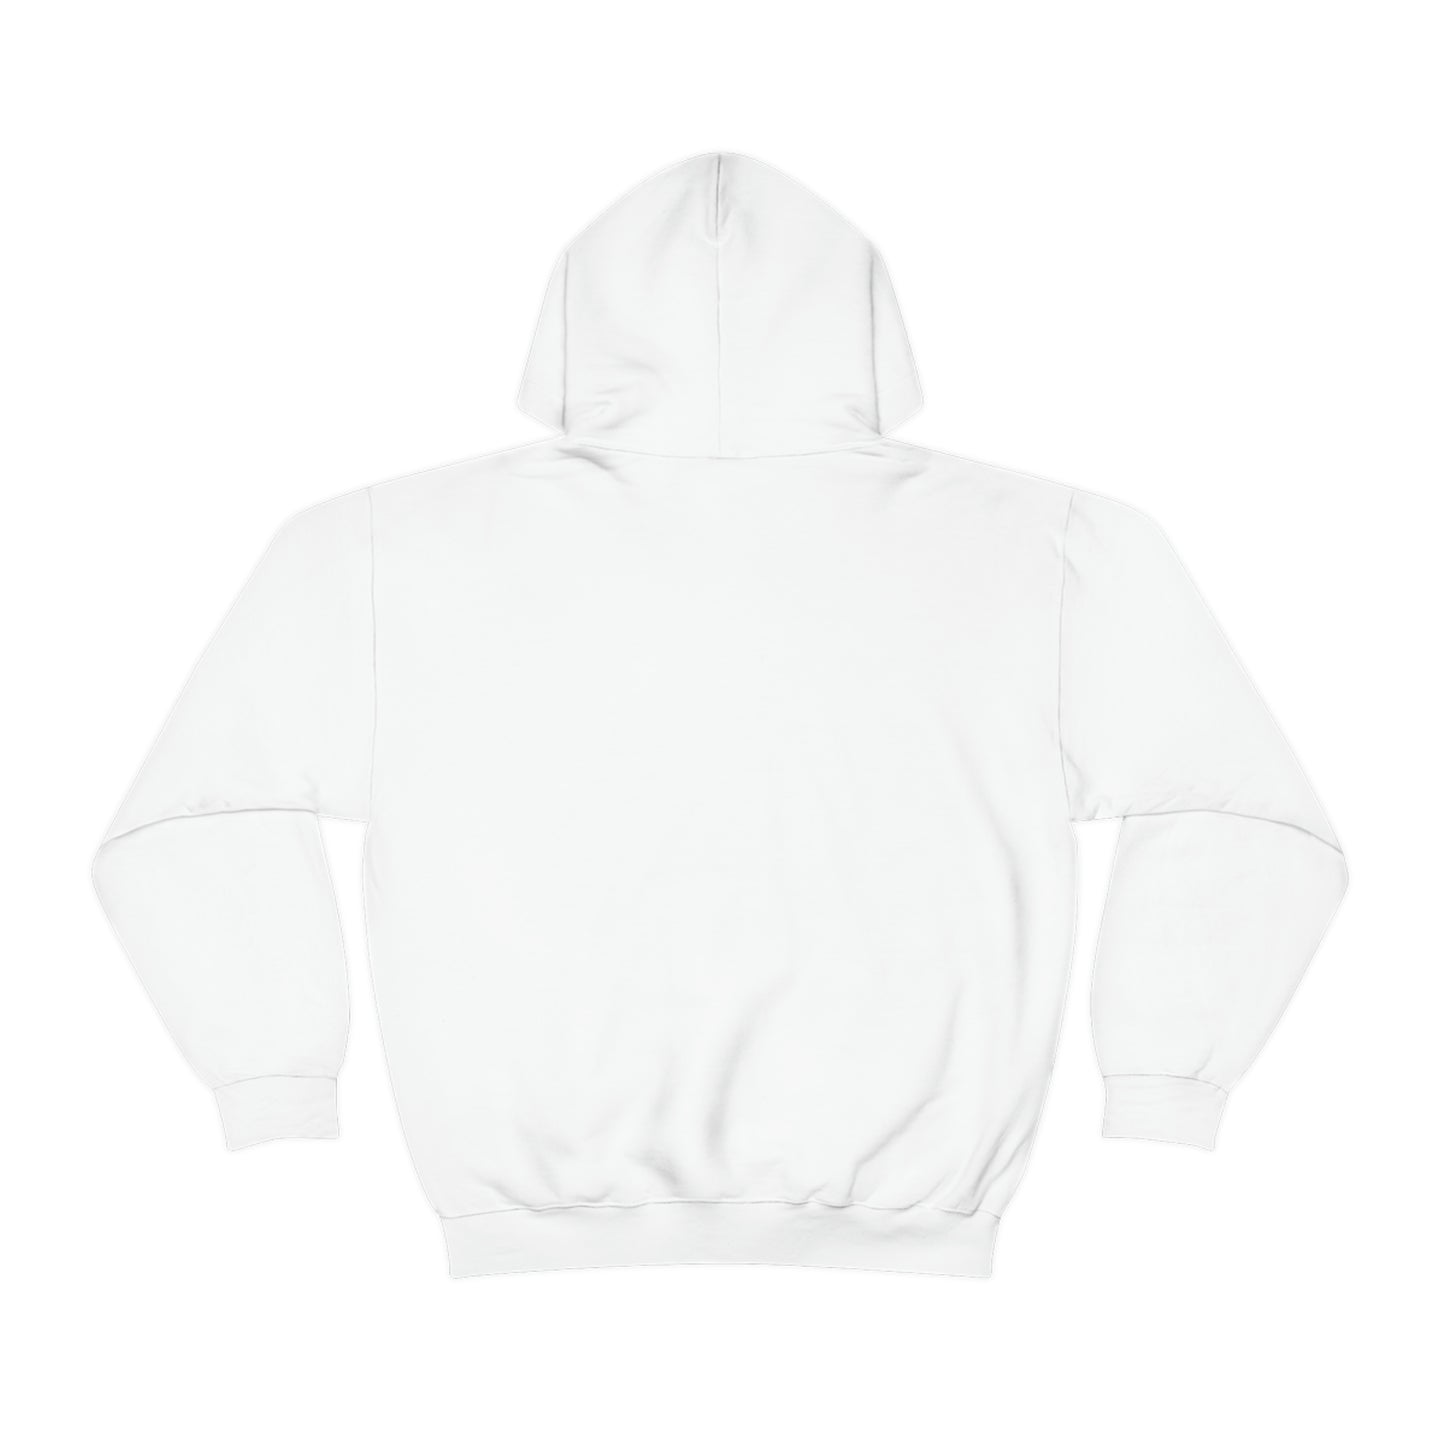 JSmith "Praise Him Anyway" *Club Edition Unisex Heavy Blend™ Hooded Sweatshirt